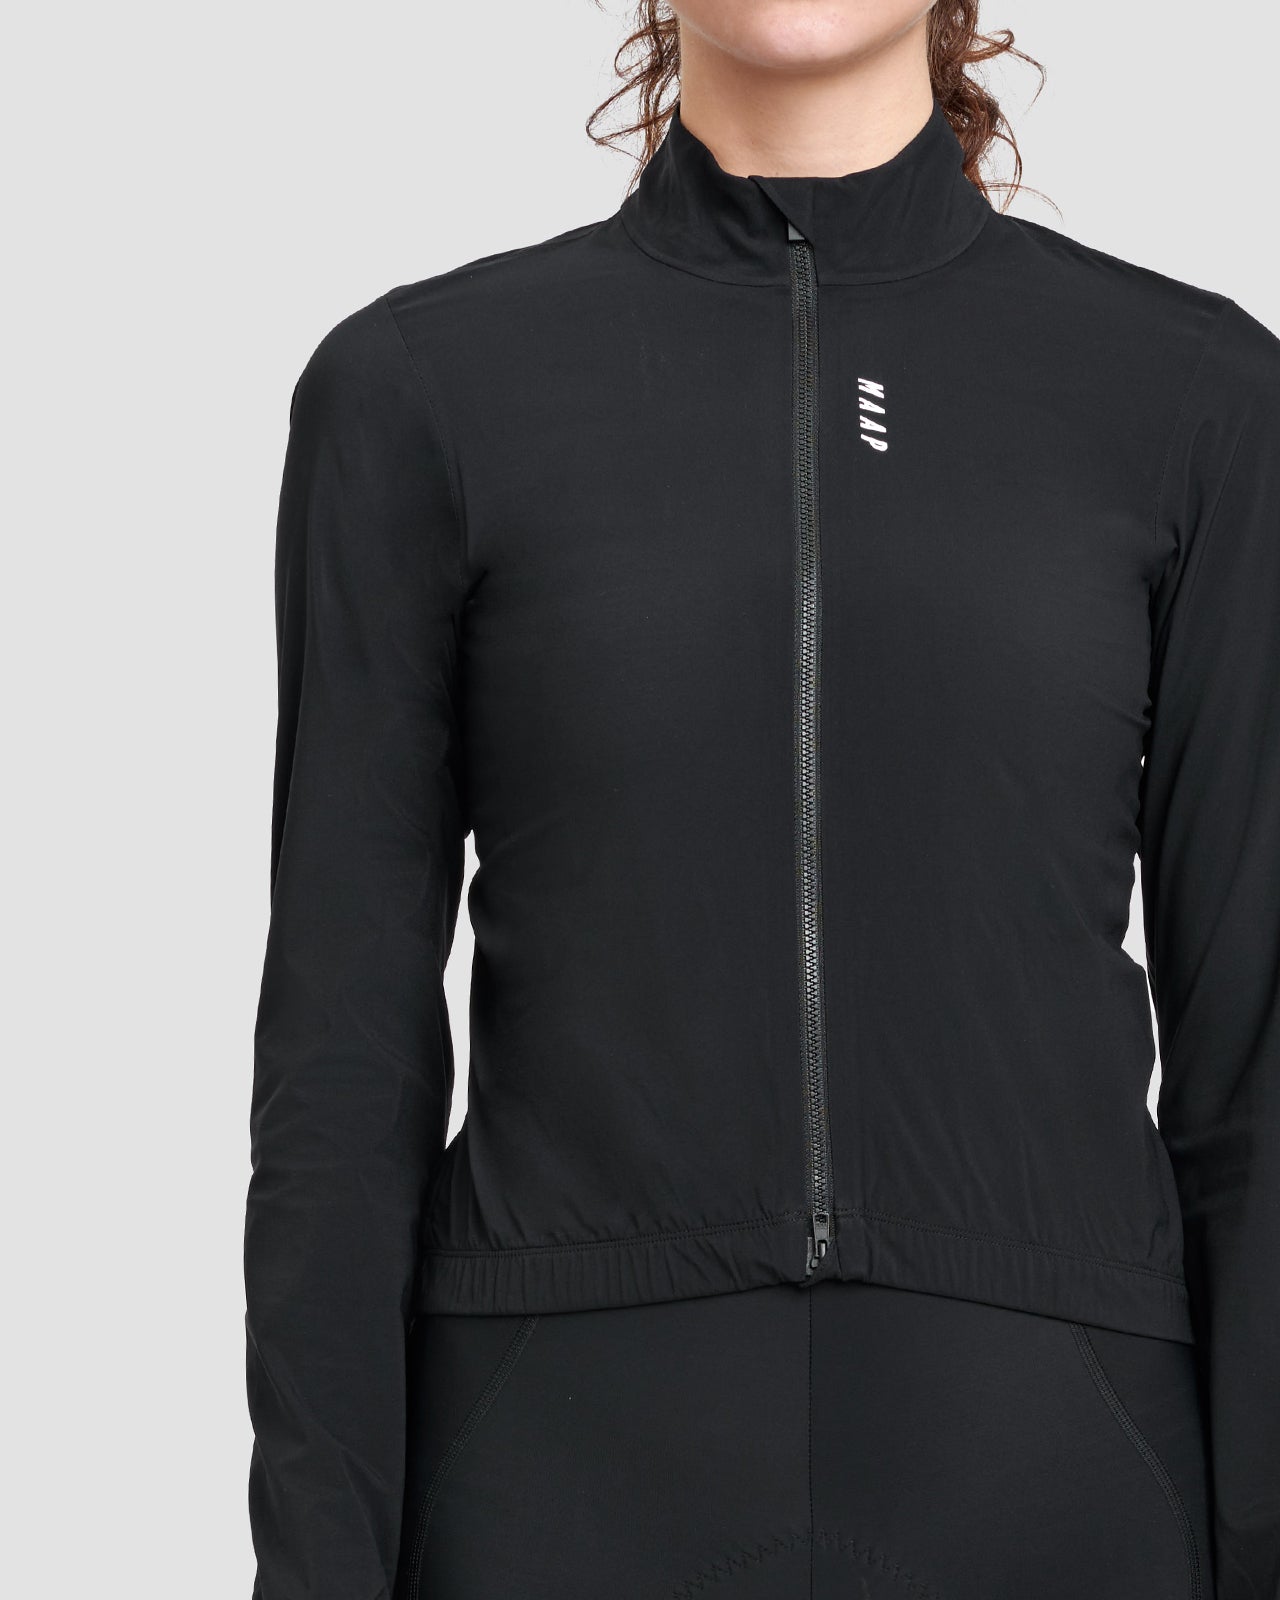 Women's Prime Jacket - MAAP Cycling Apparel